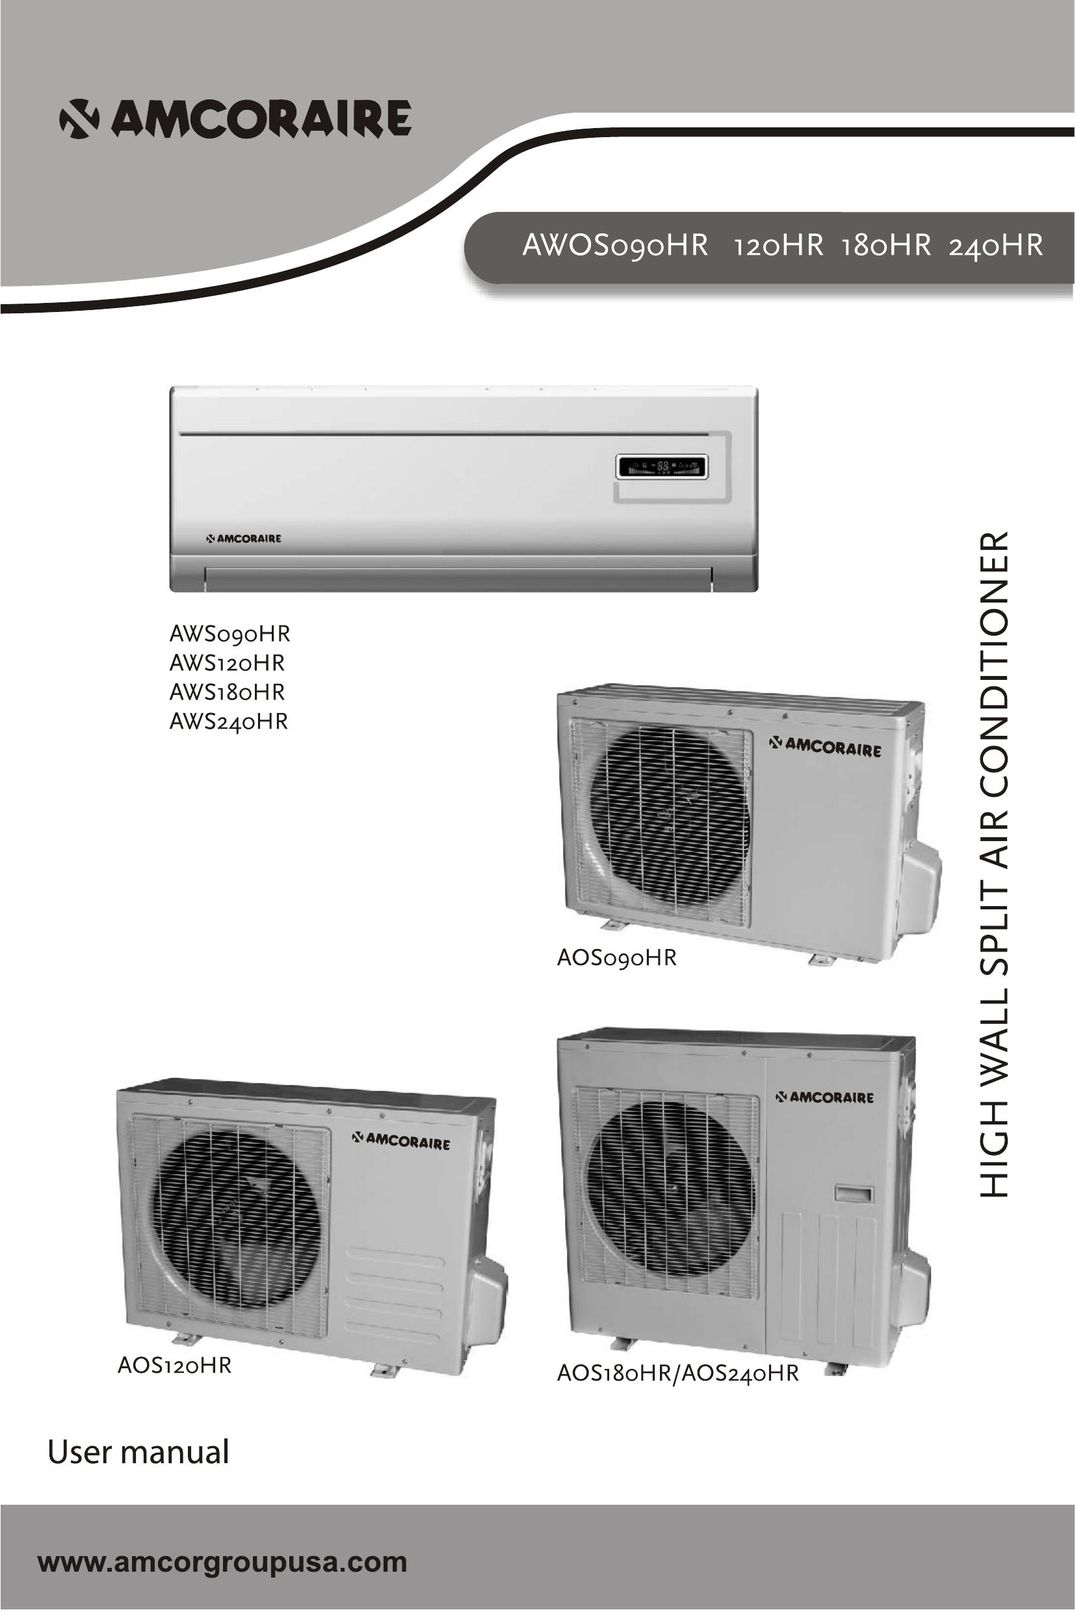 Amcor AOS240HR Air Conditioner User Manual